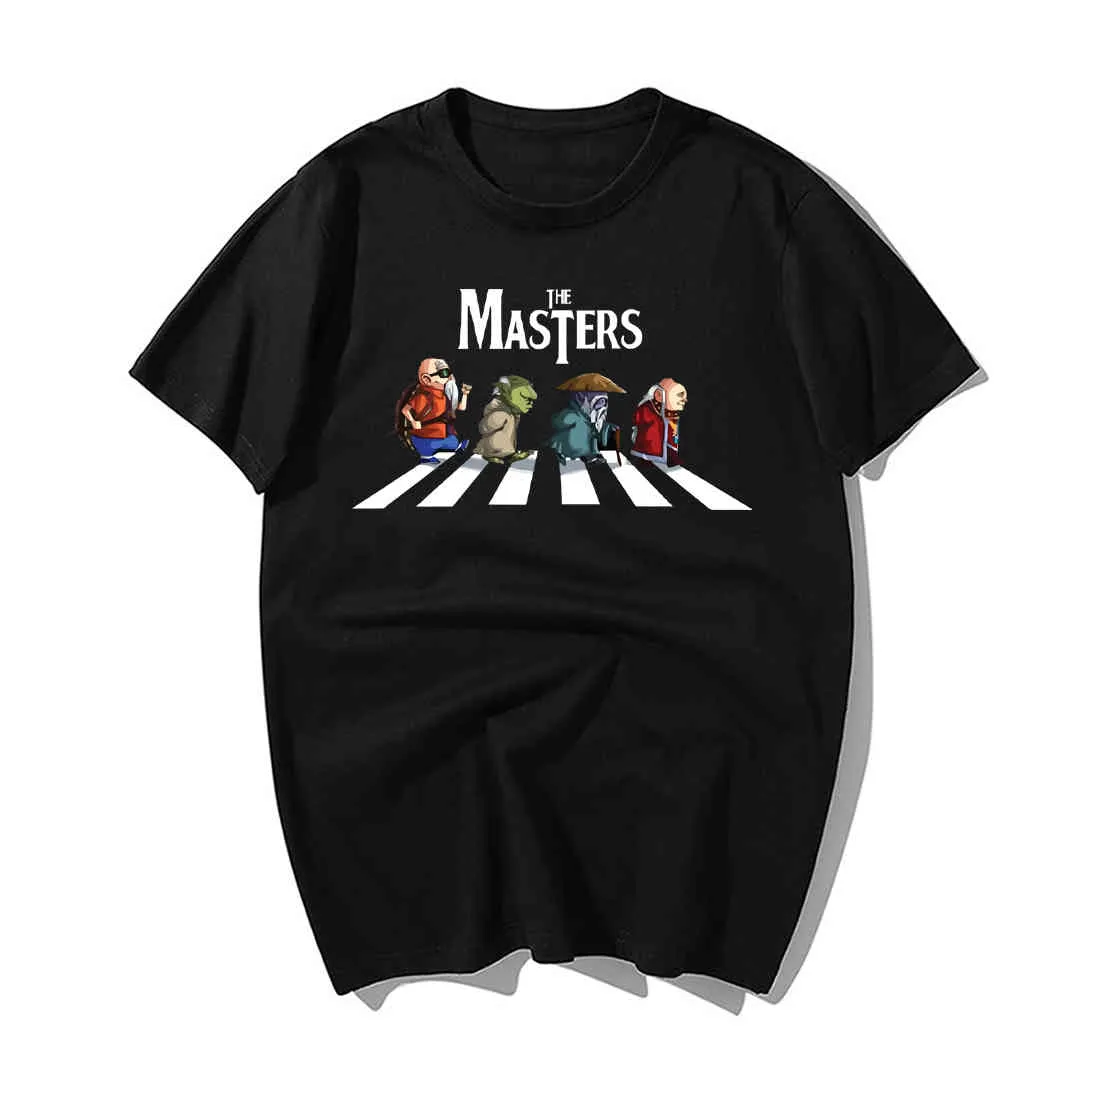 Funny Anime Shirt The Masters Walking Across Fashion Print Tshirt Men Summer Casual High Quality Cotton Short Sleeve Tops Tees